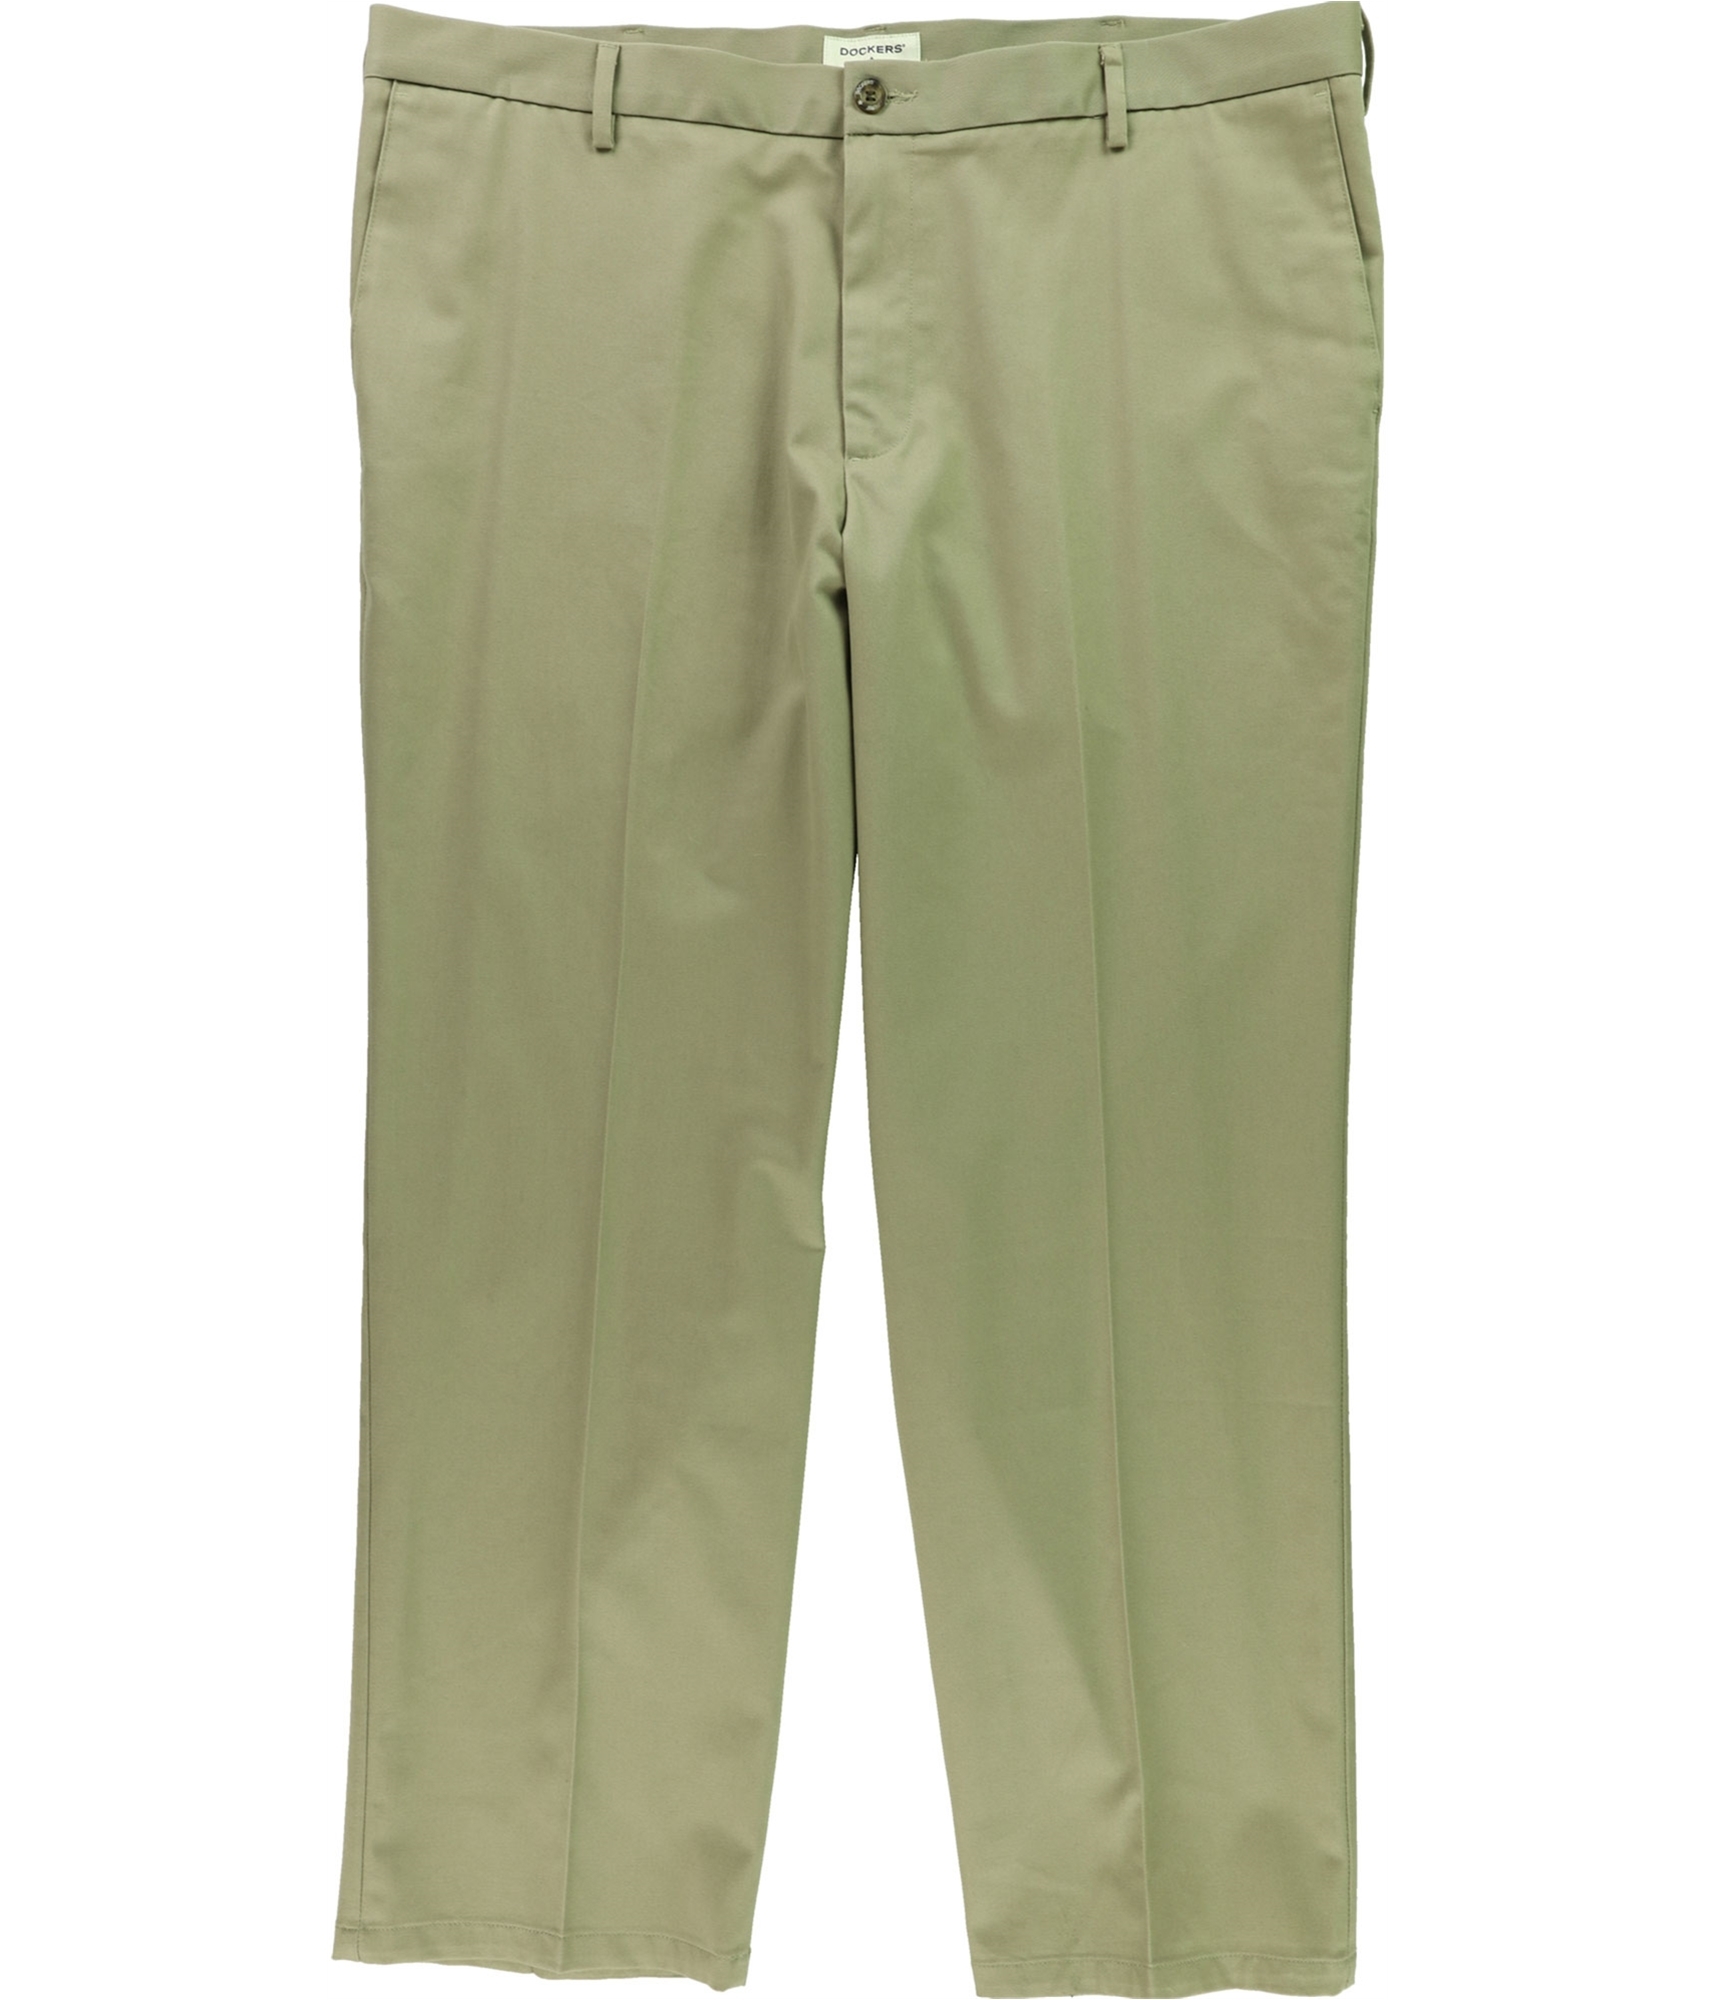 Buy a Mens Dockers Signature Khaki Casual Chino Pants Online ...